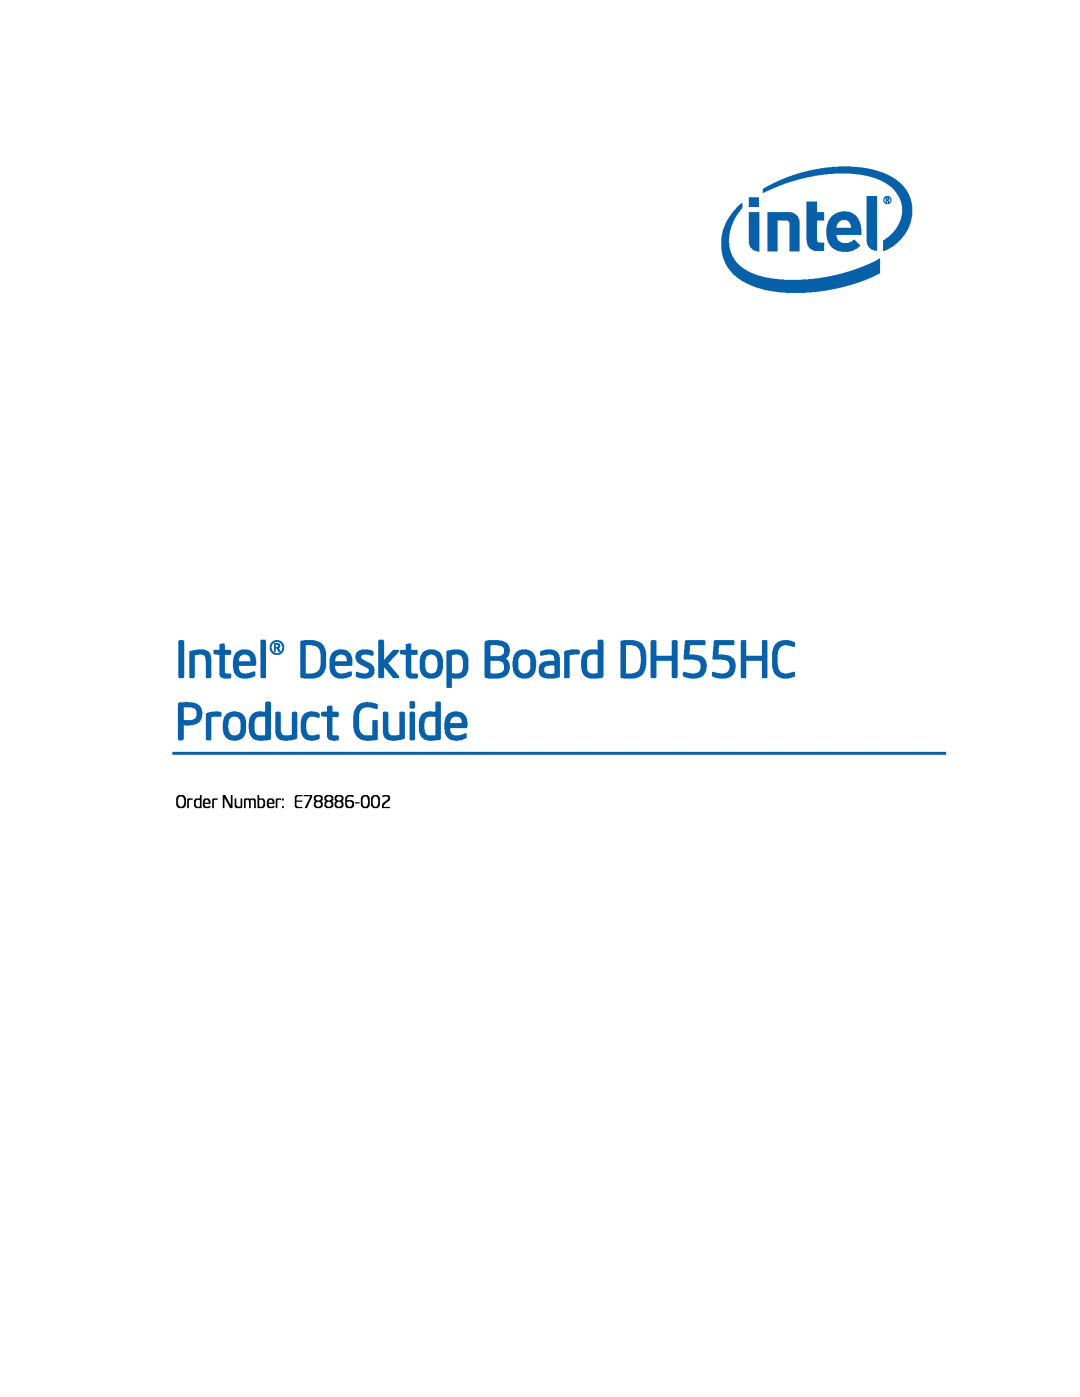 Intel BOXDH55HC manual Intel Desktop Board DH55HC Product Guide, Order Number E78886-002 